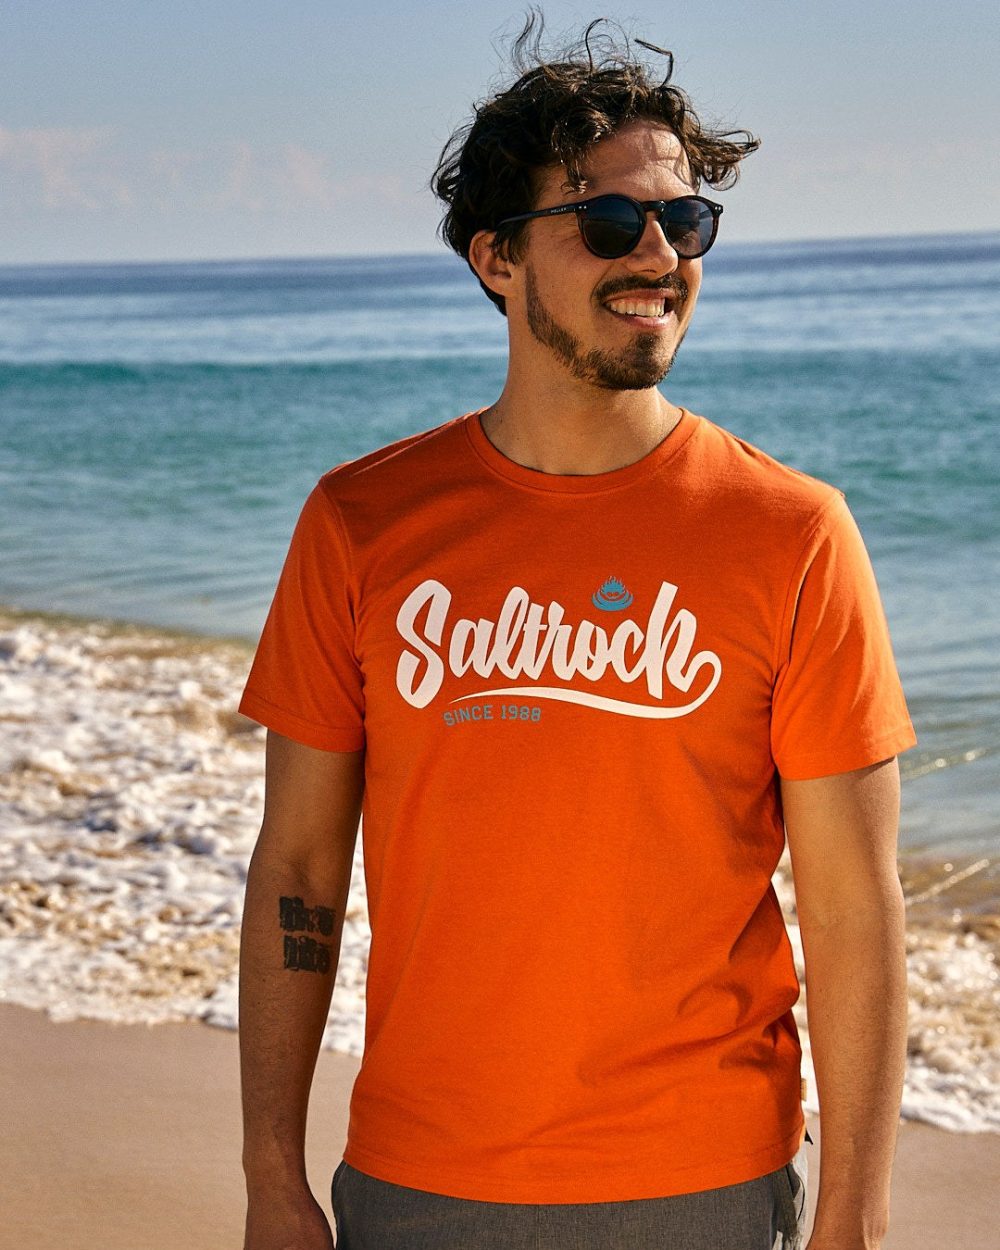 Saltrock tshirt